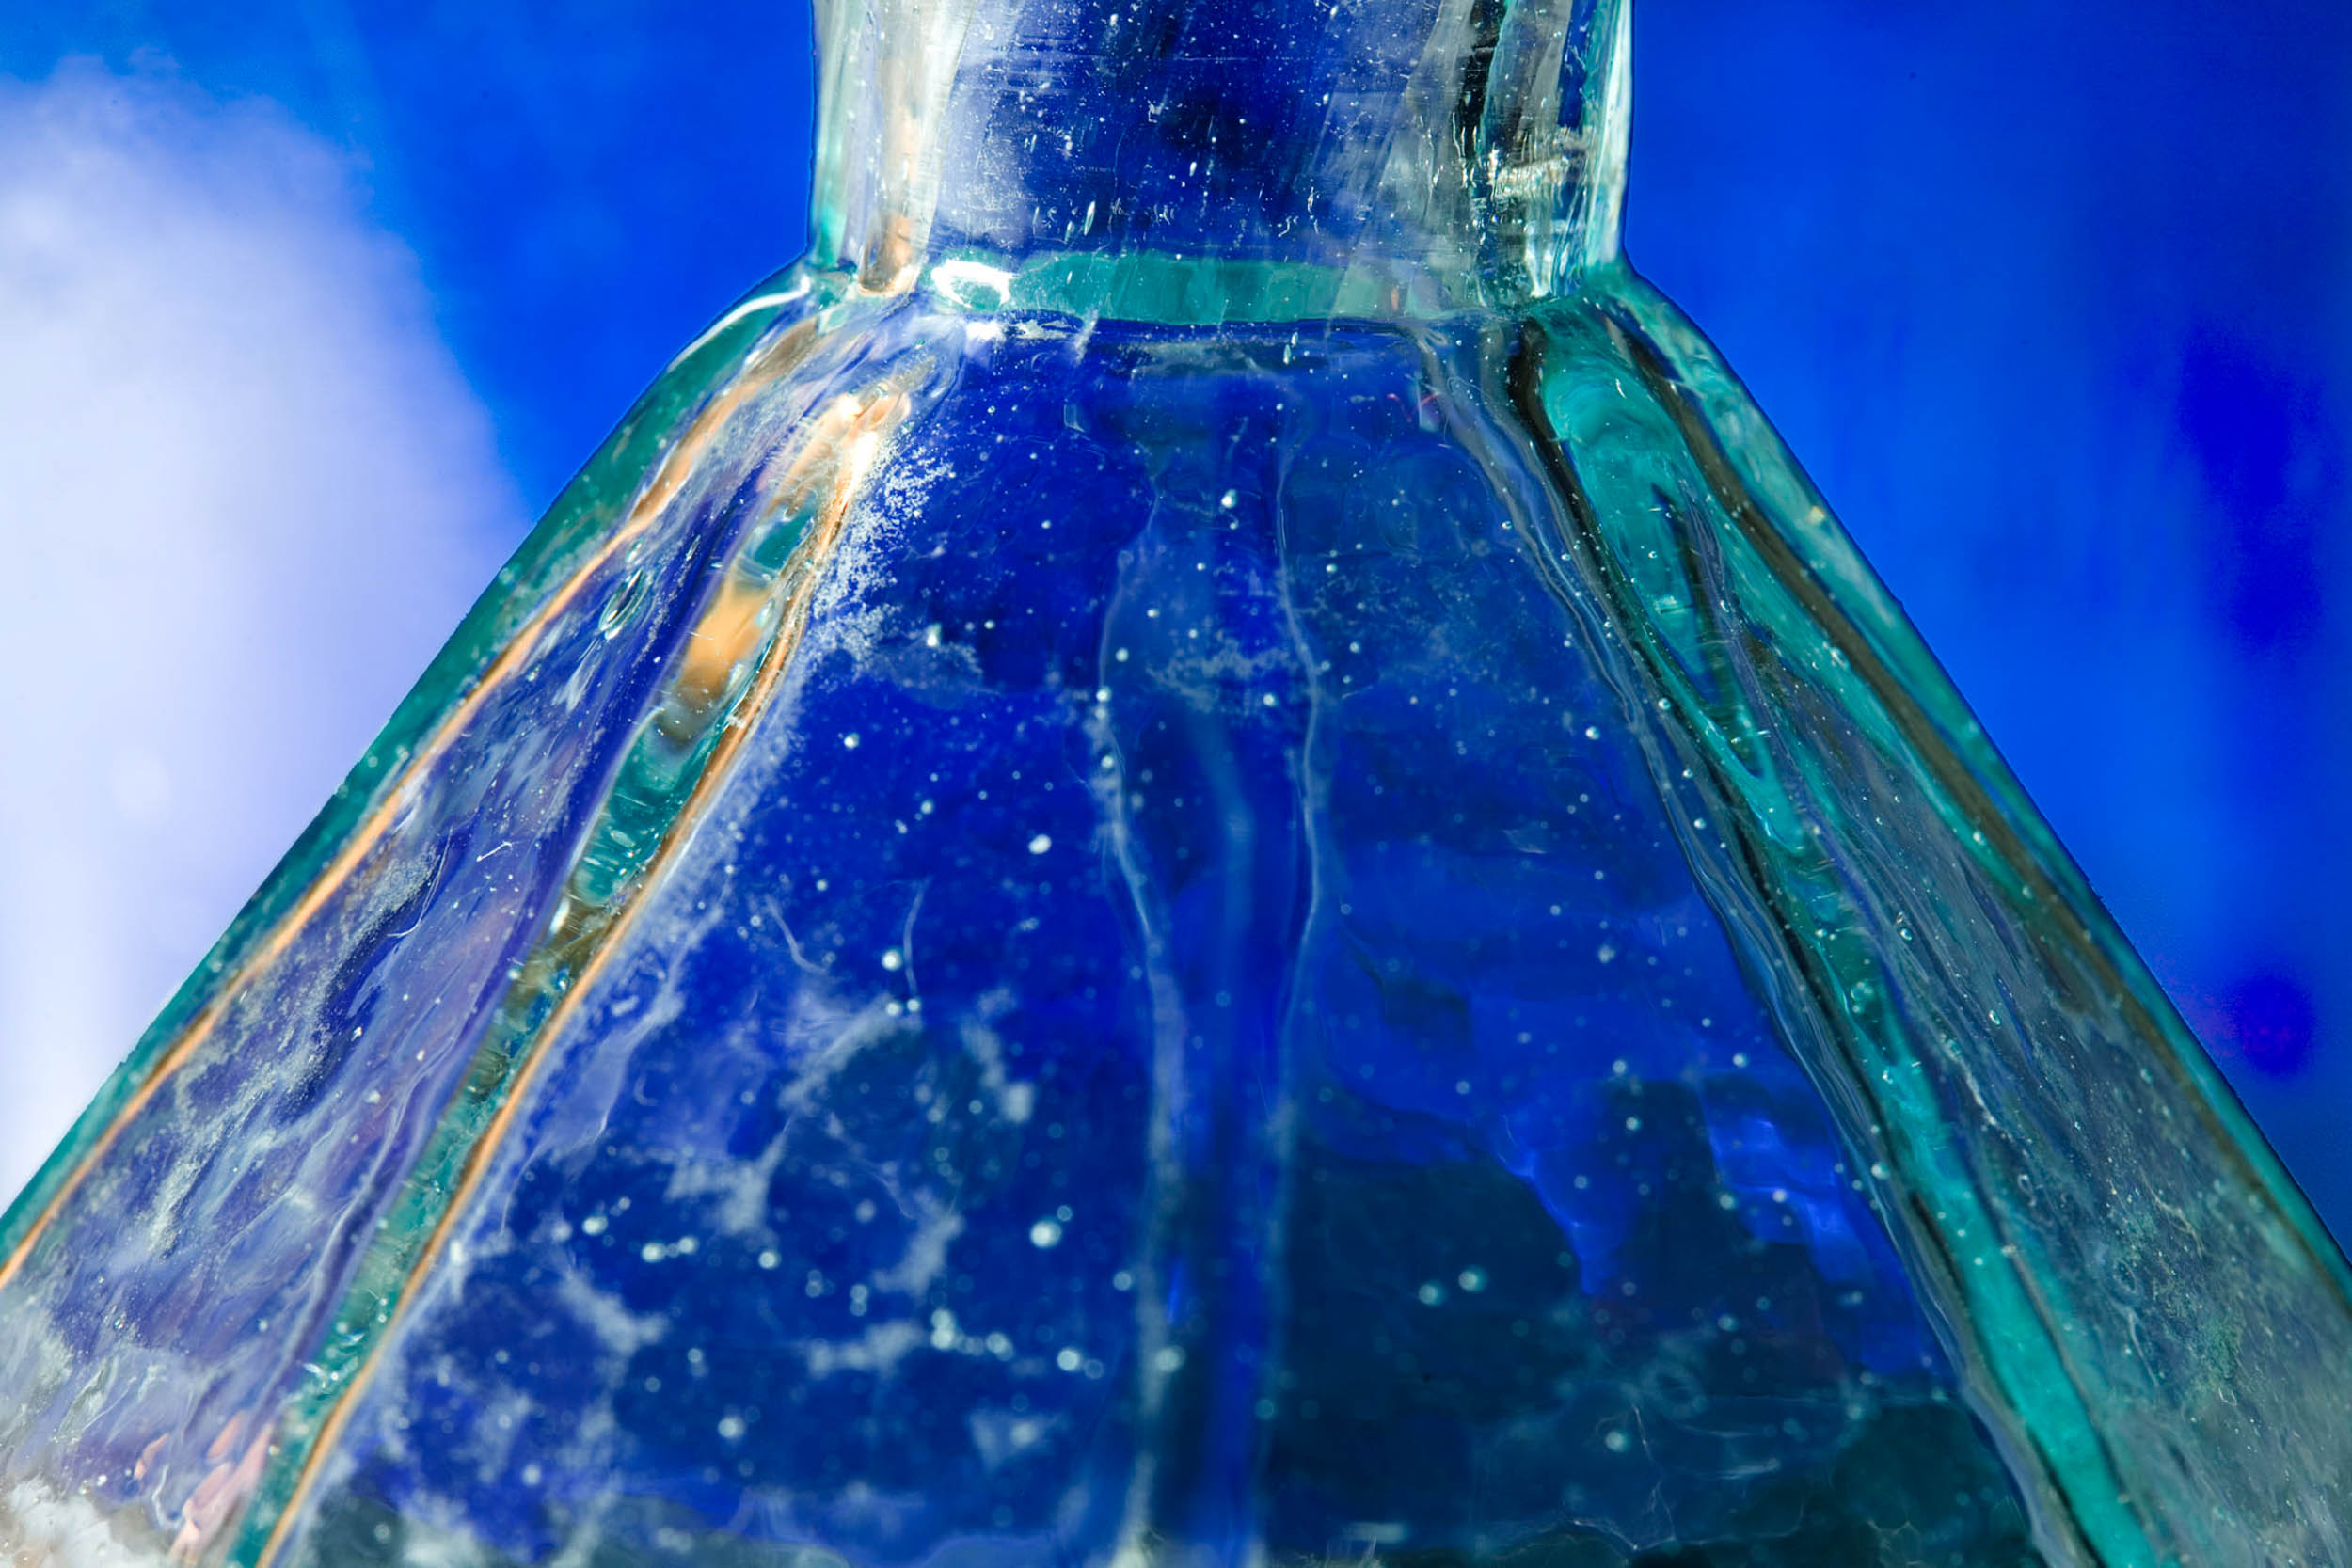 Bottle Series